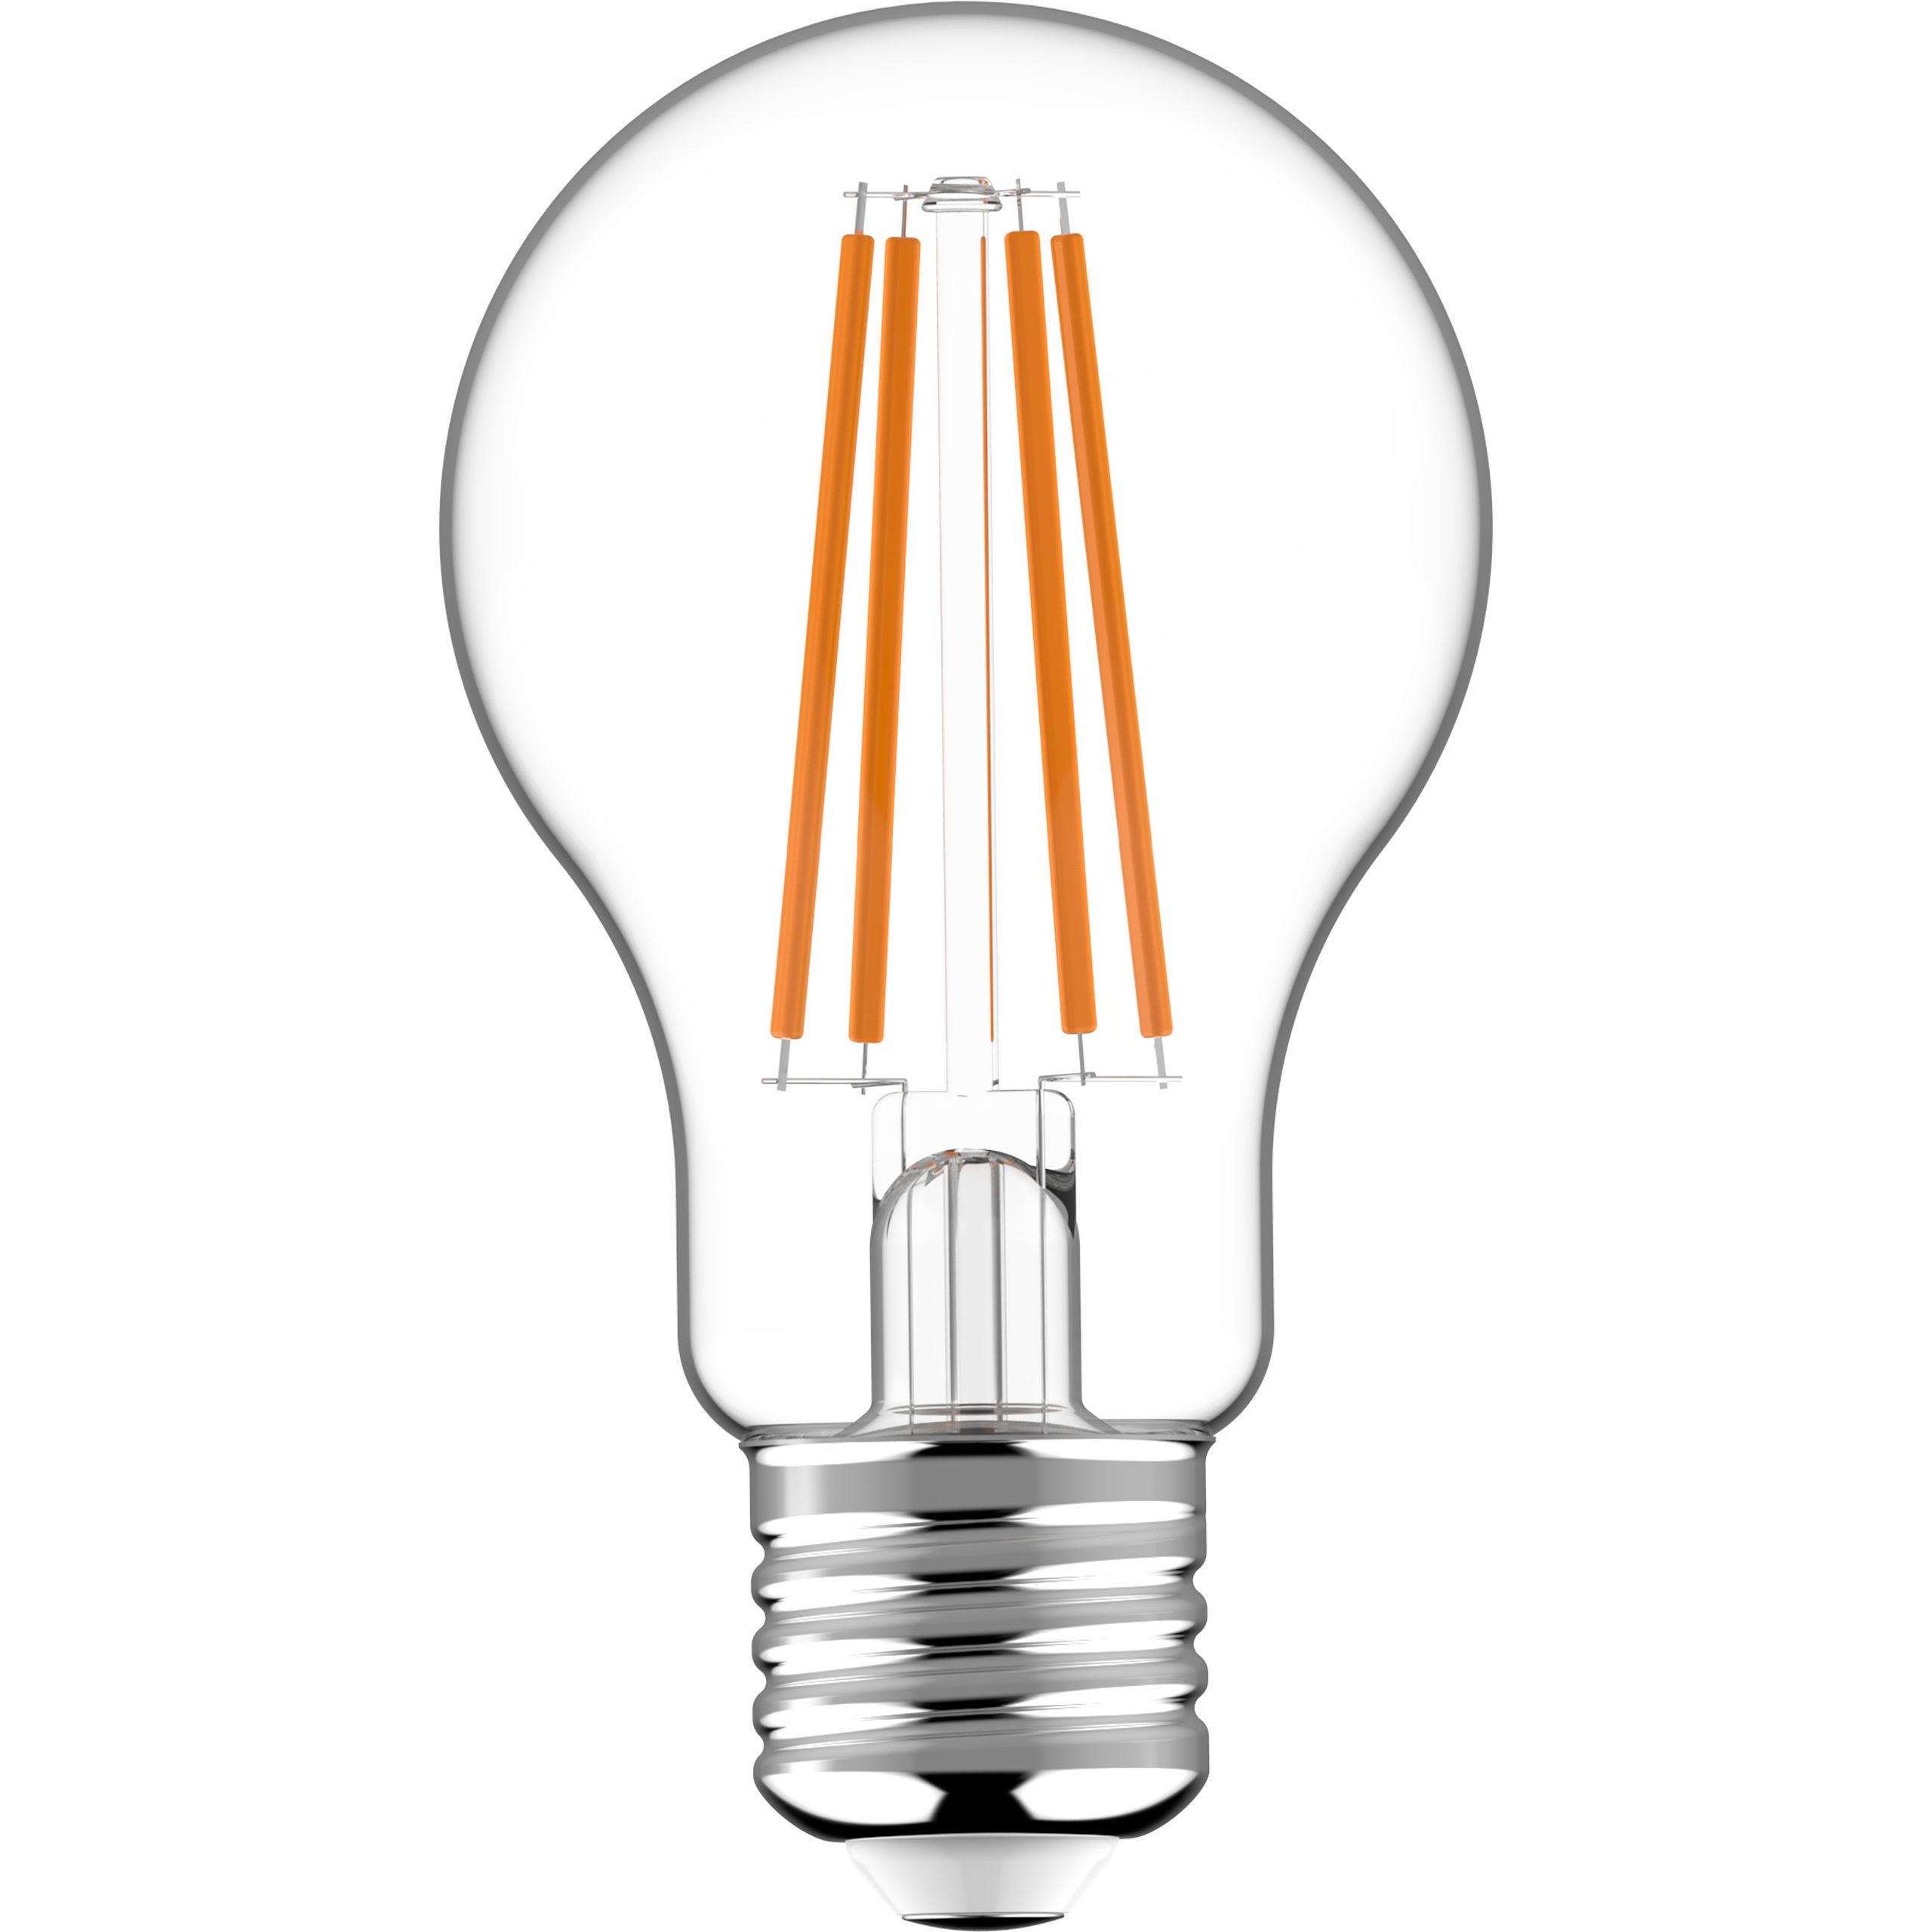 LED's light LED-Leuchtmittel 0620142 LED Glühbirne, E27, E27 7W warmweiß Klar A60